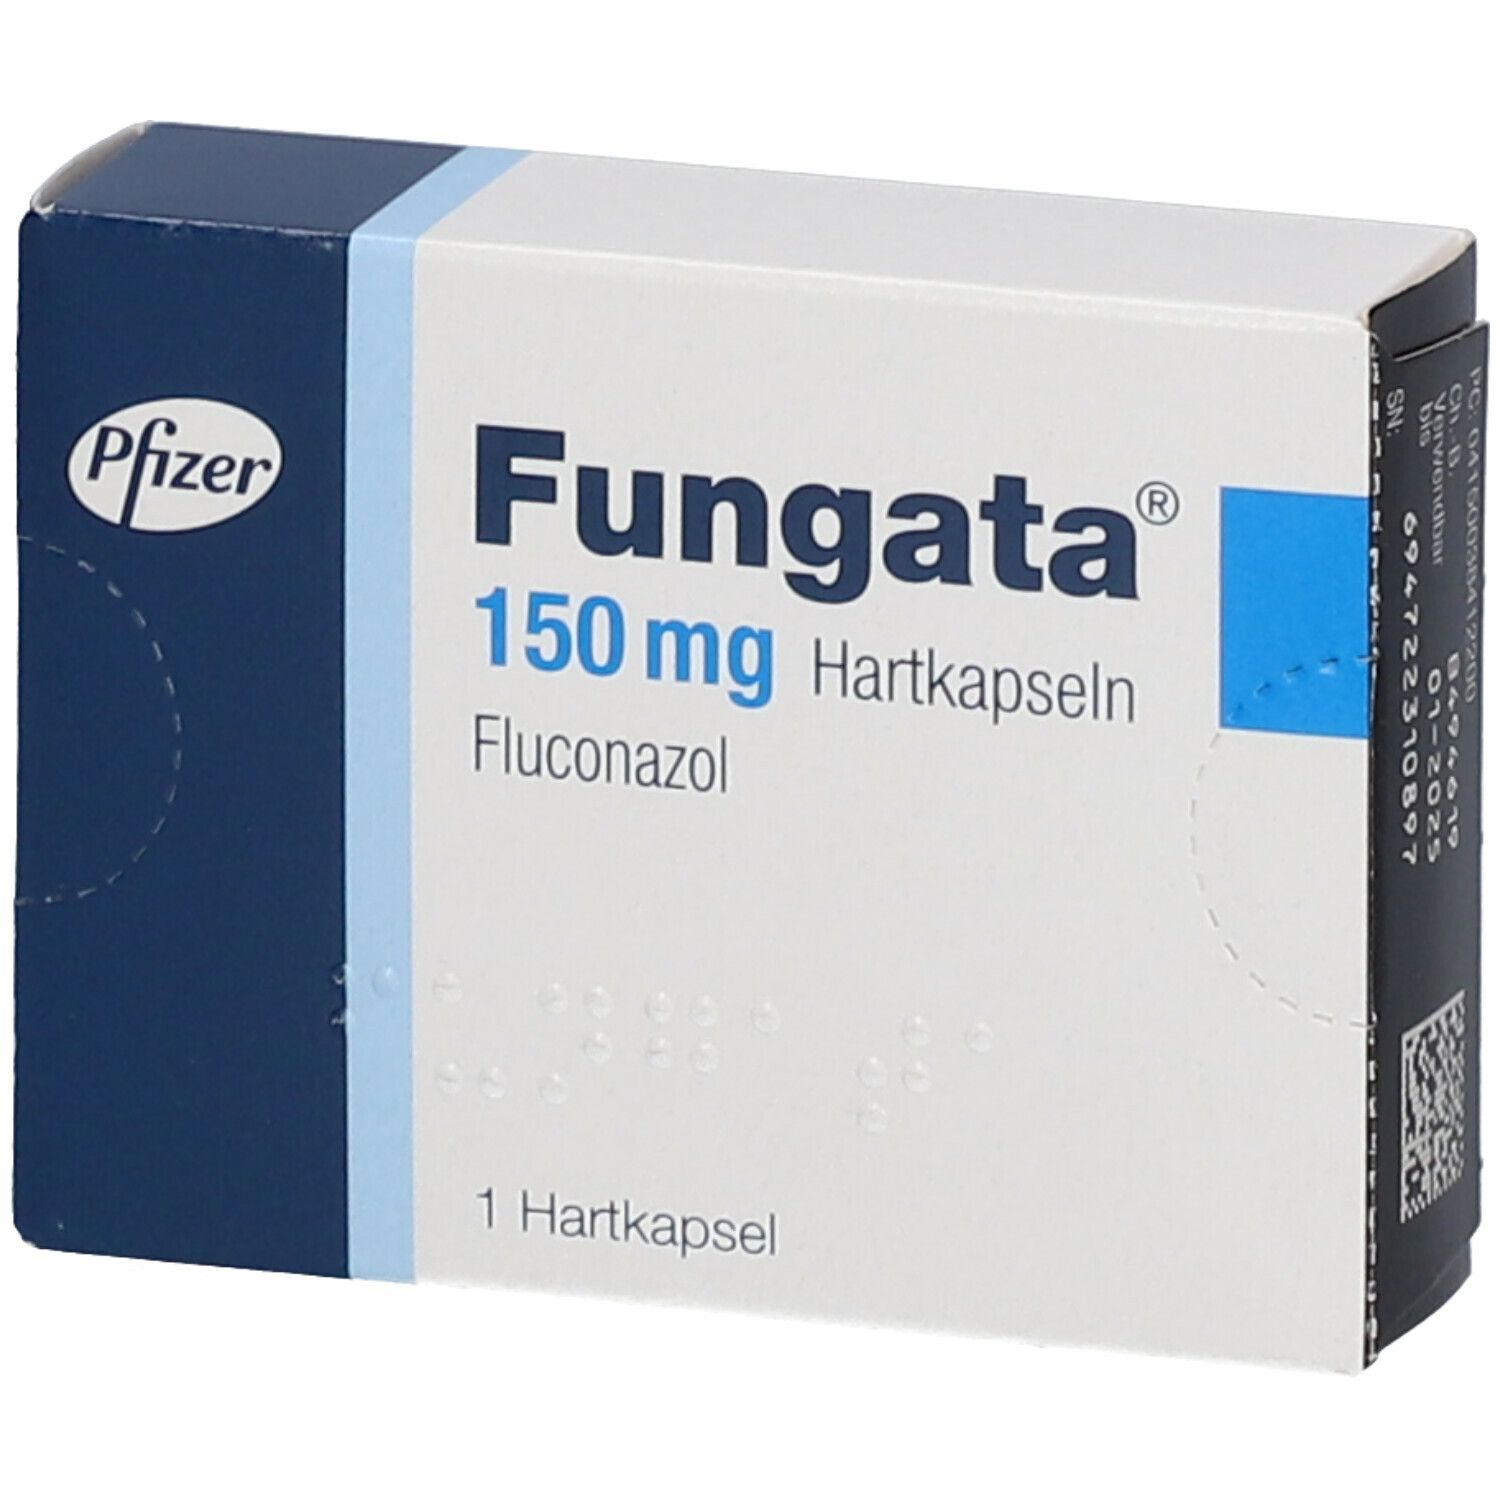 Fungata® 150 mg